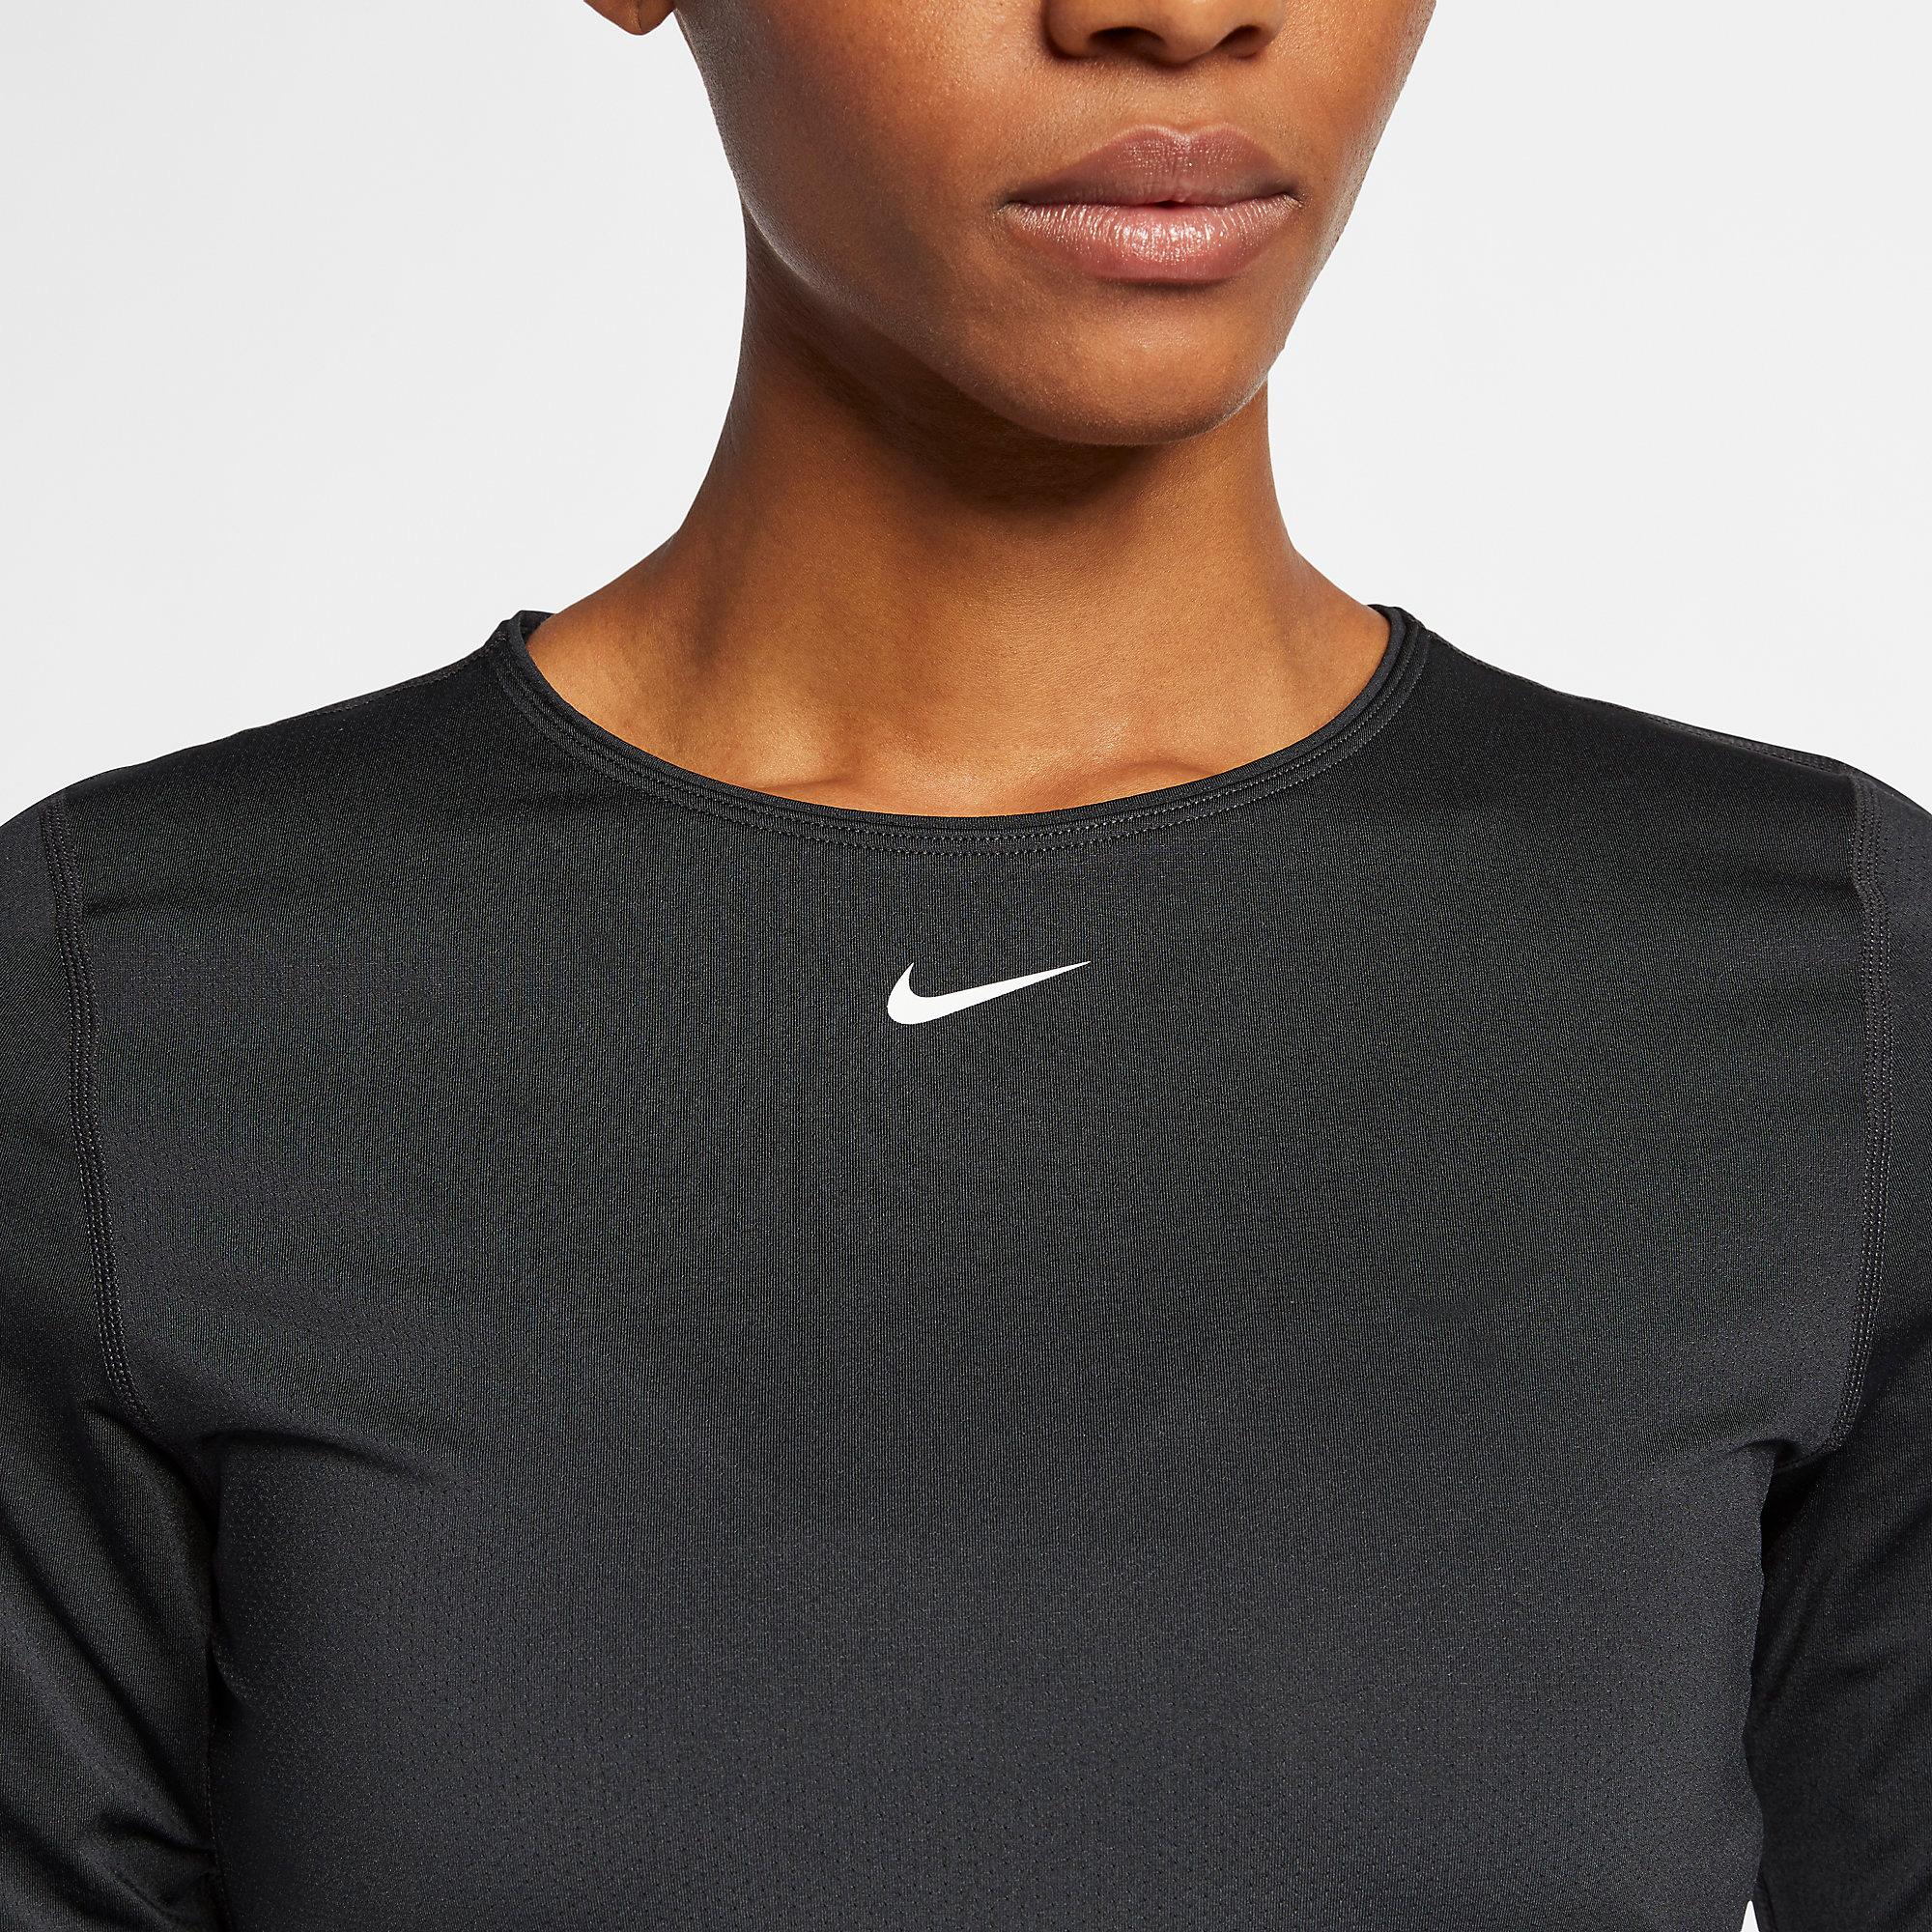 Nike Womens Long Sleeved Mesh Top - Black - Tennisnuts.com